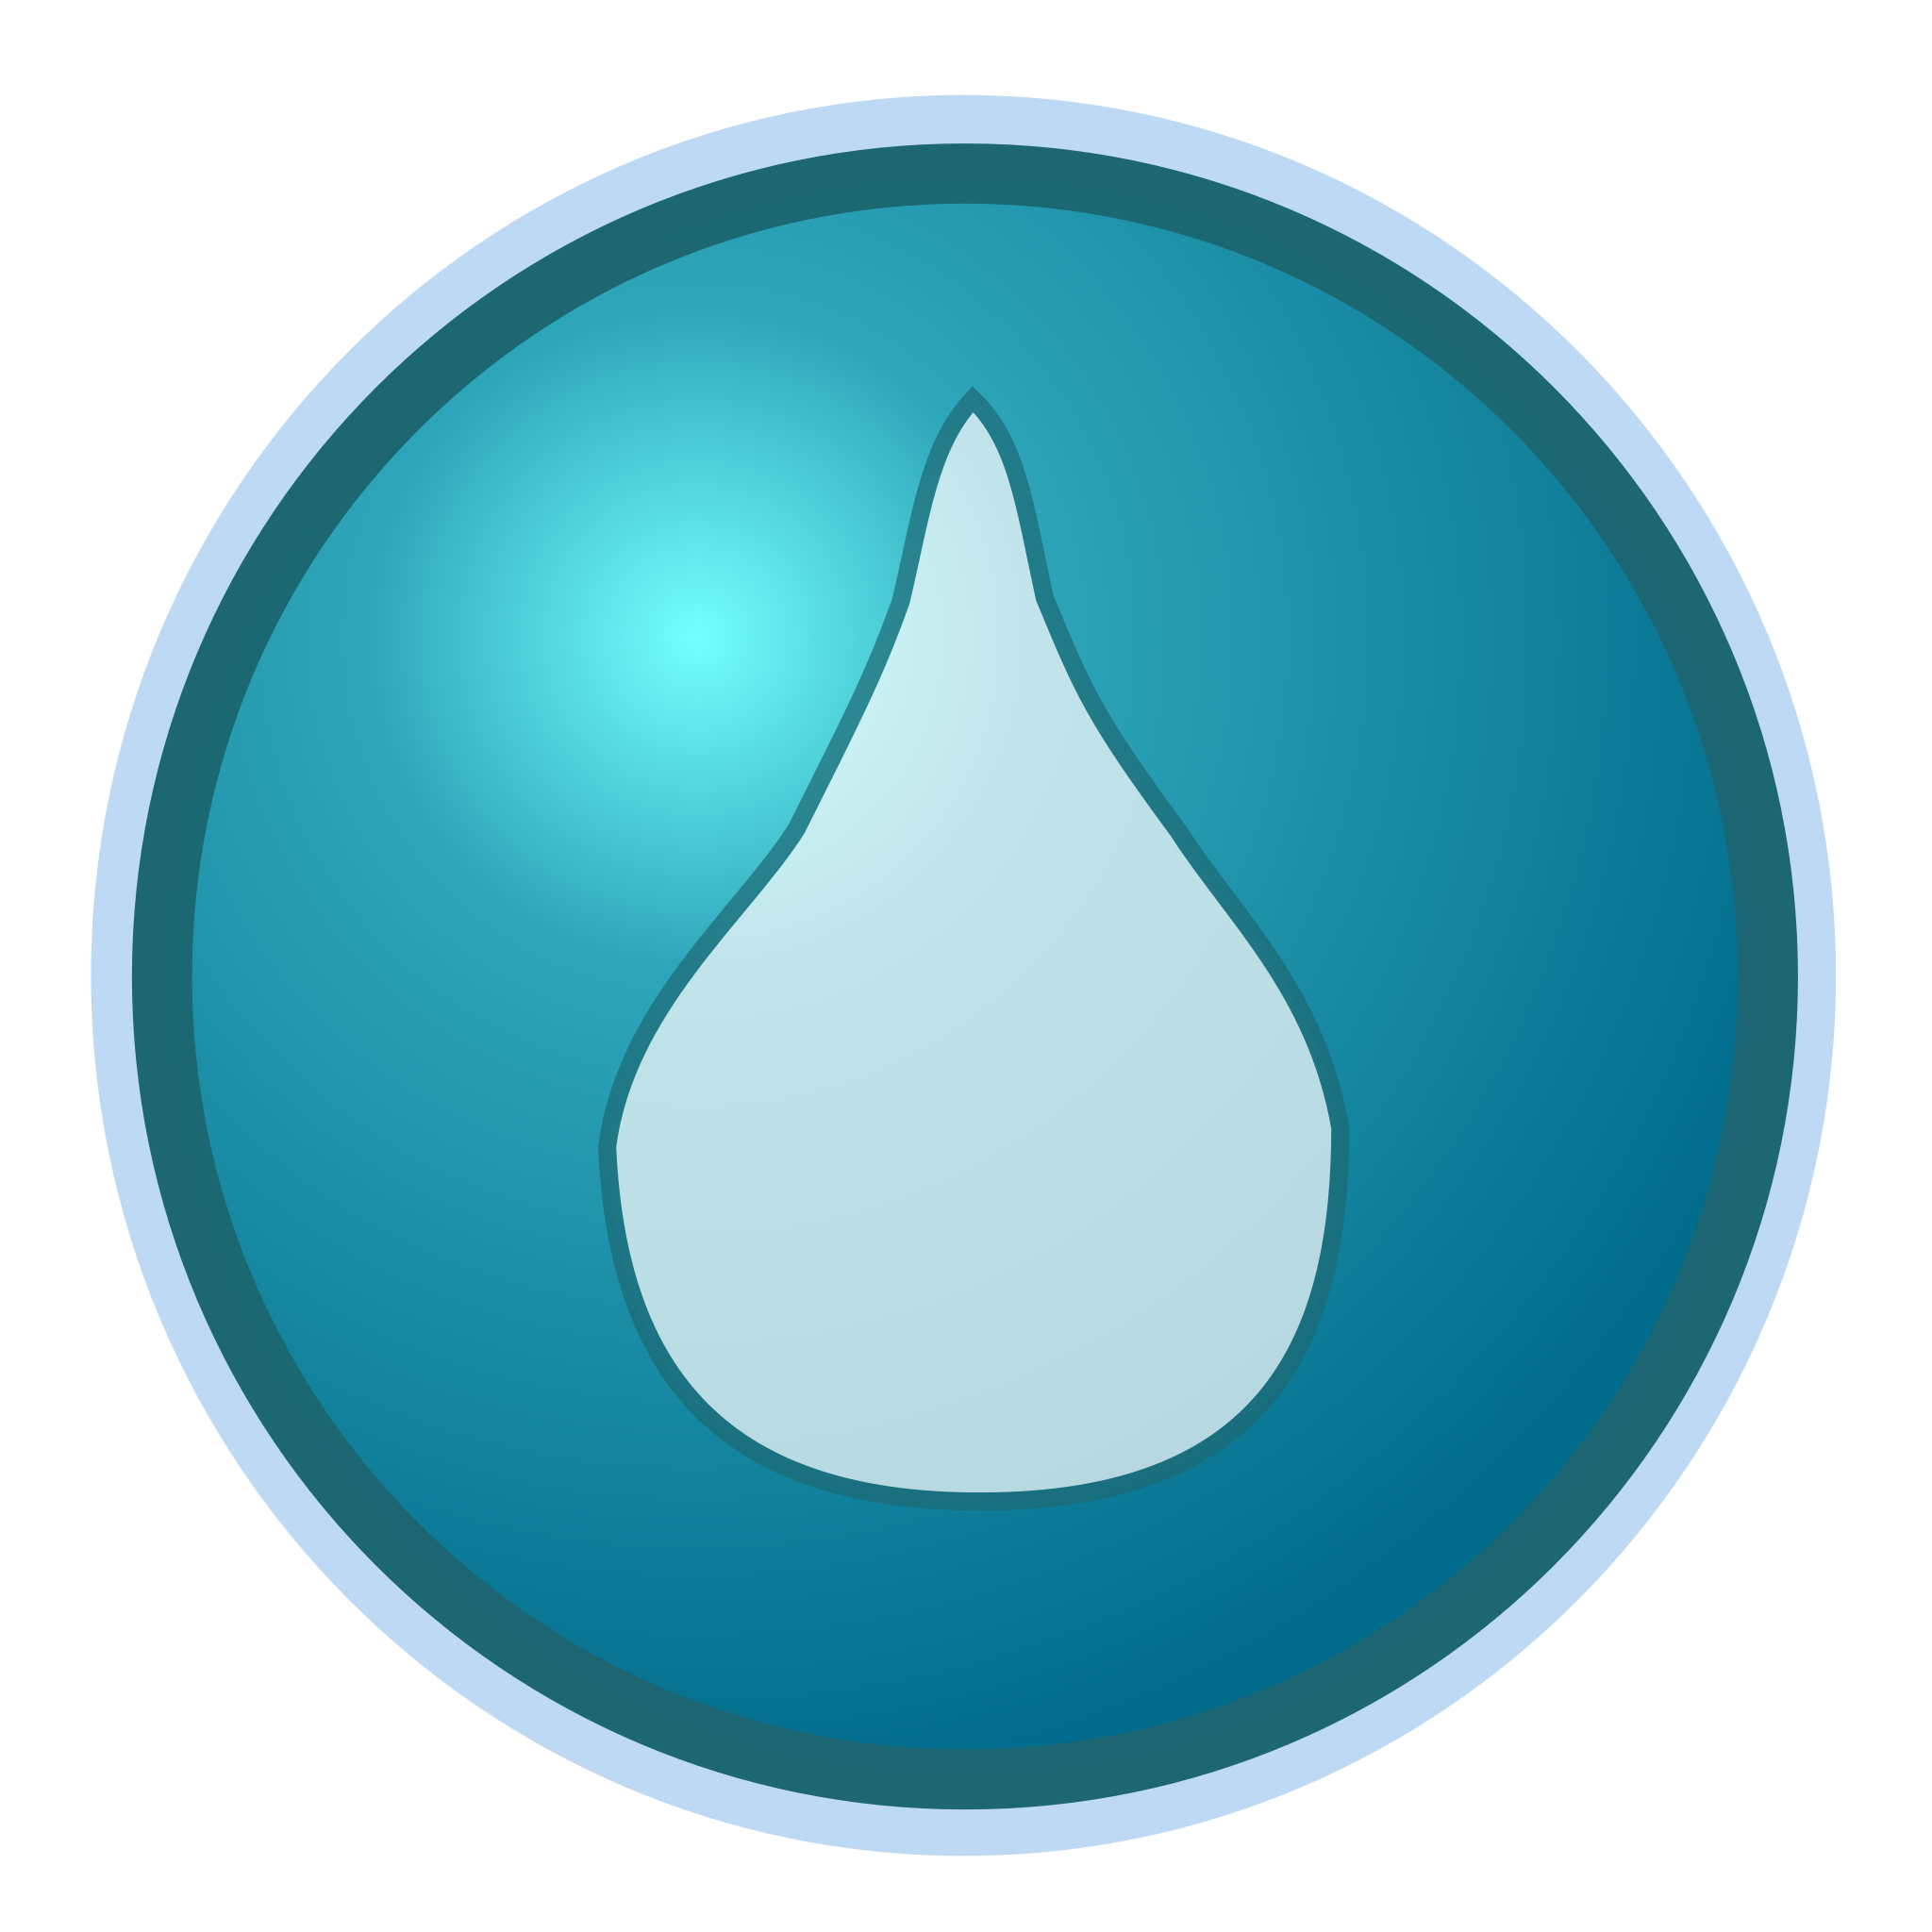 File:Water drop.svg - Wikipedia